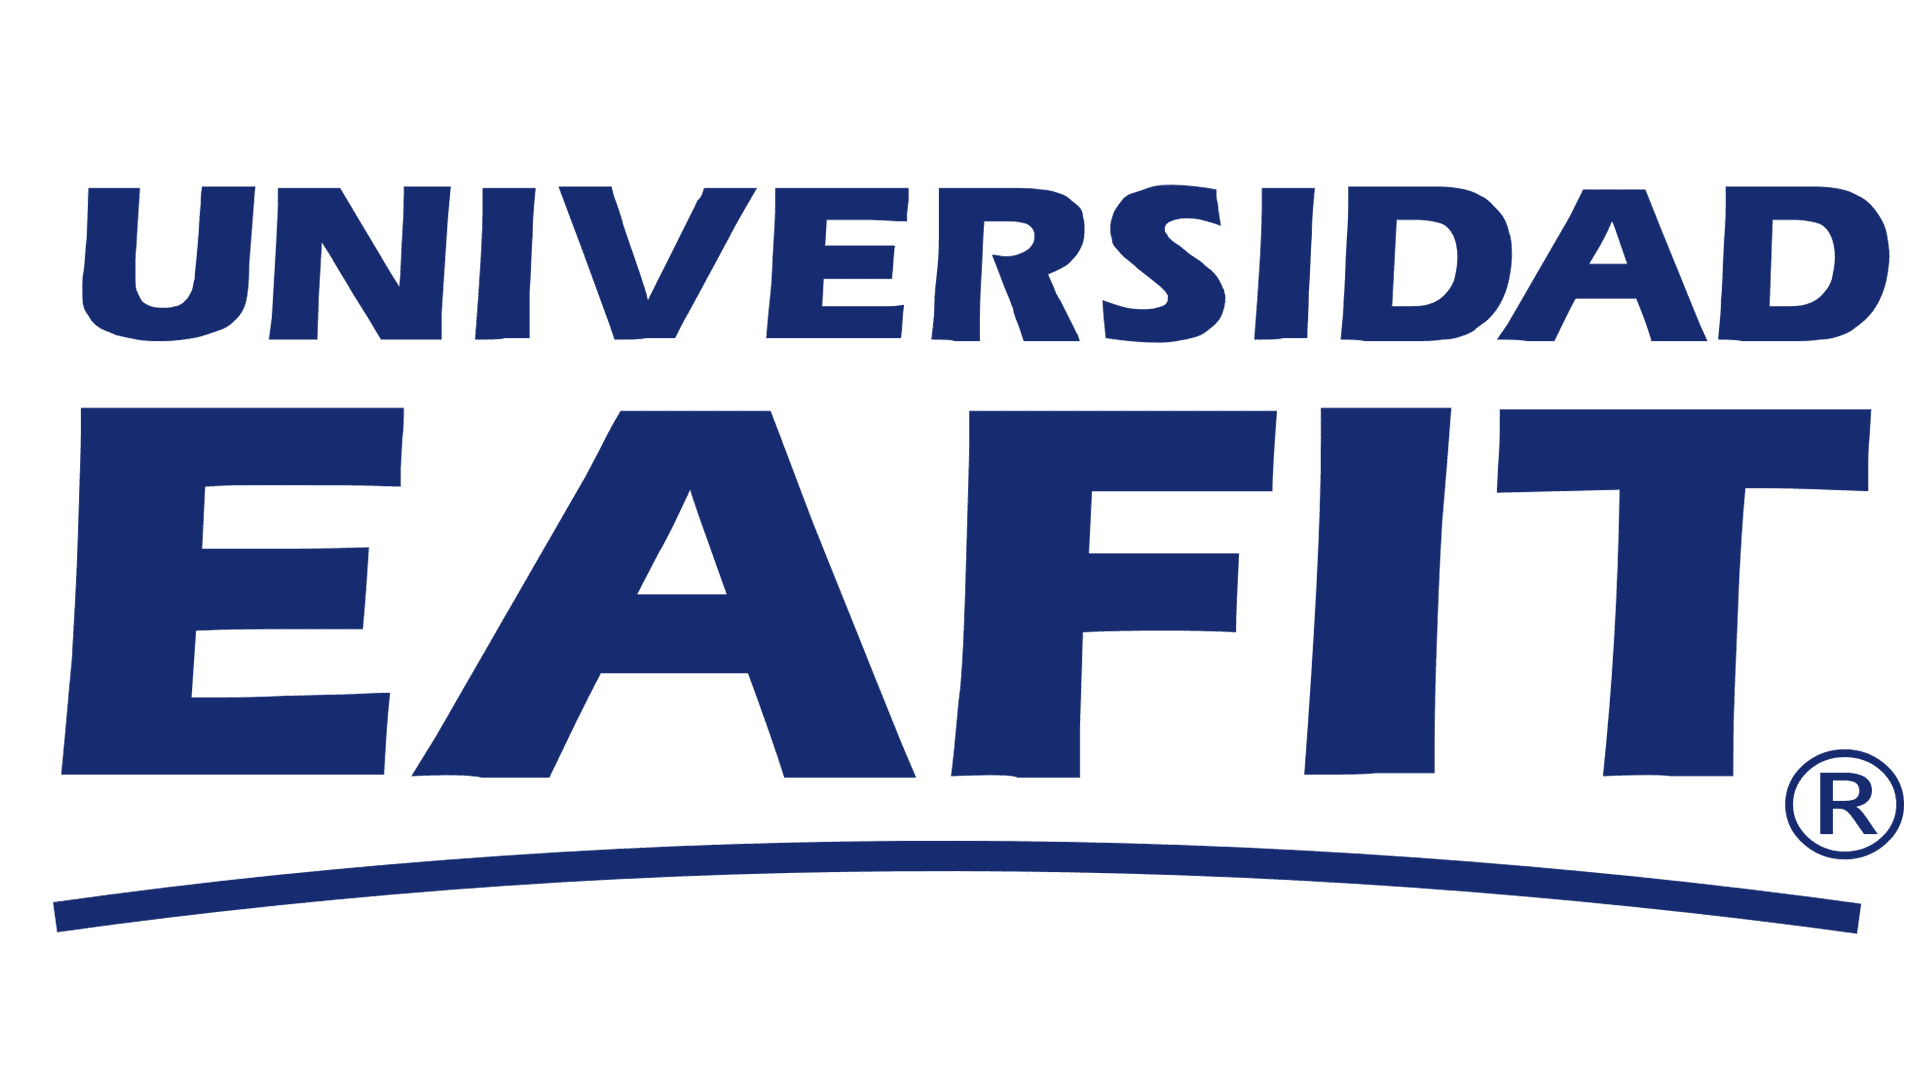 EAFIT University's logo